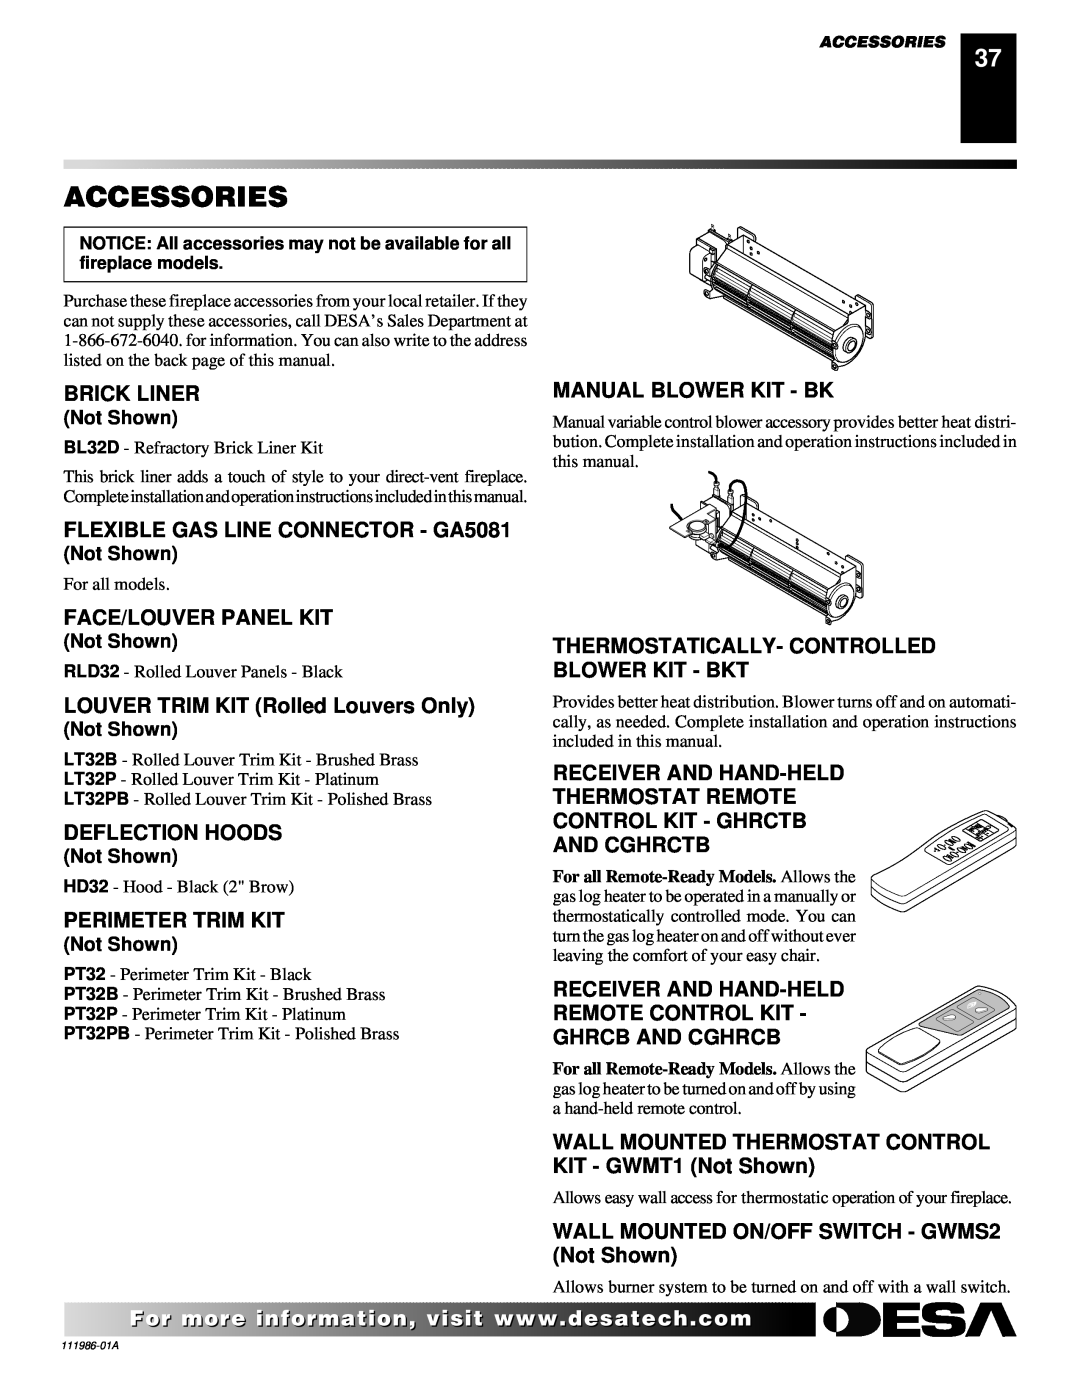 Desa T32N, T32P Accessories, Brick Liner, FLEXIBLE GAS LINE CONNECTOR - GA5081, Face/Louver Panel Kit, Deflection Hoods 